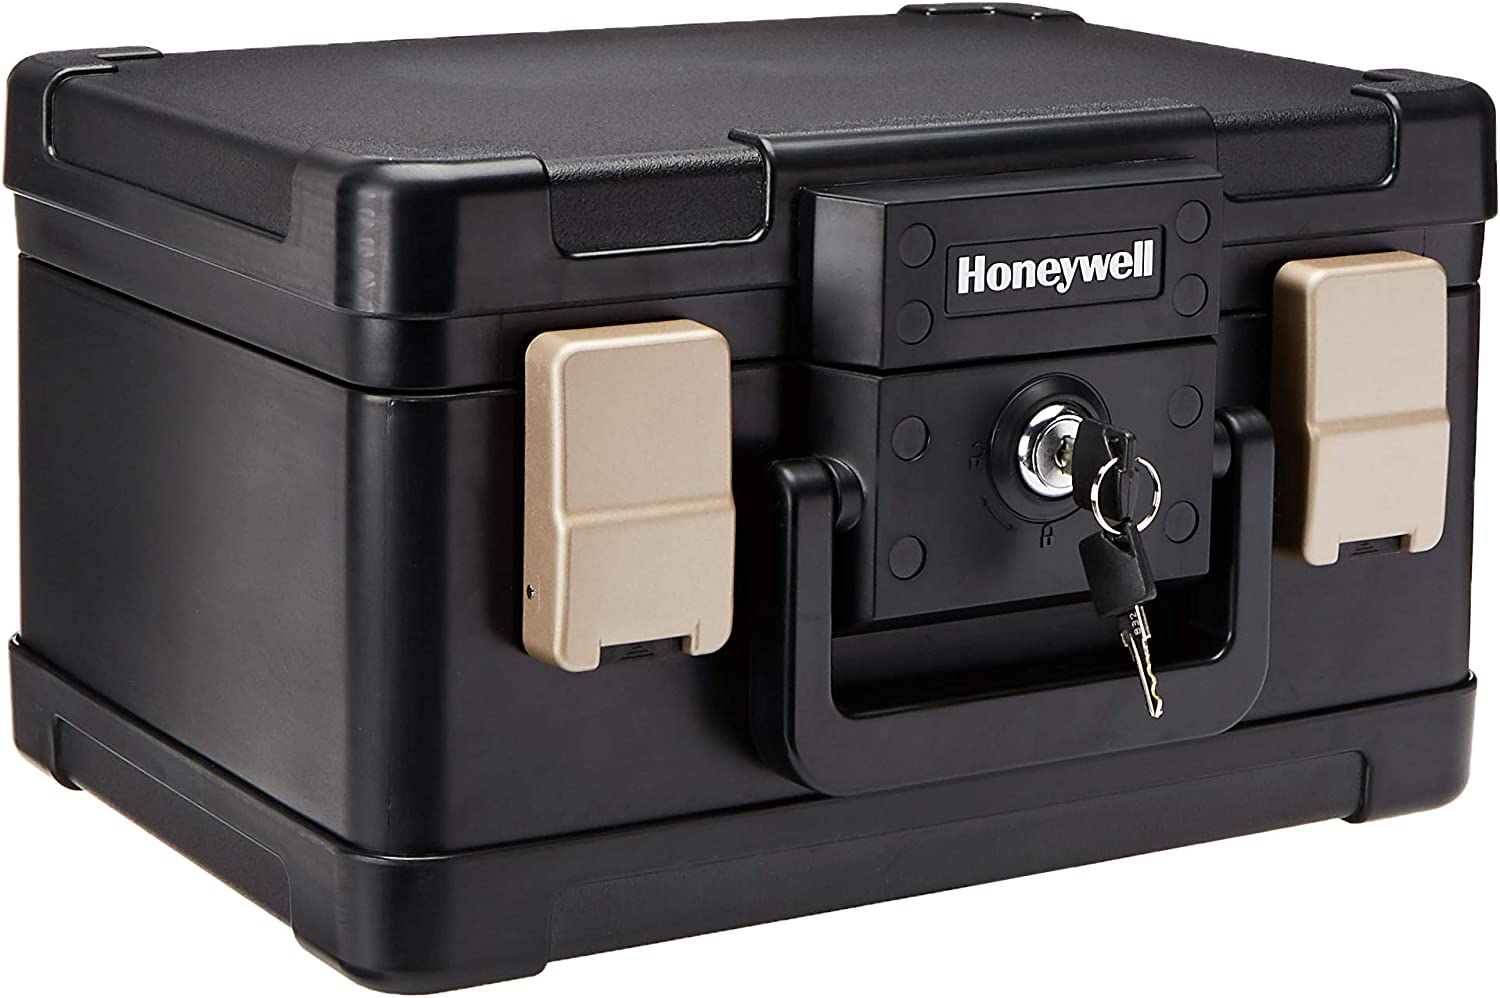 Honeywell Safes & Door Locks - 30 Minute Fire Safe [...]